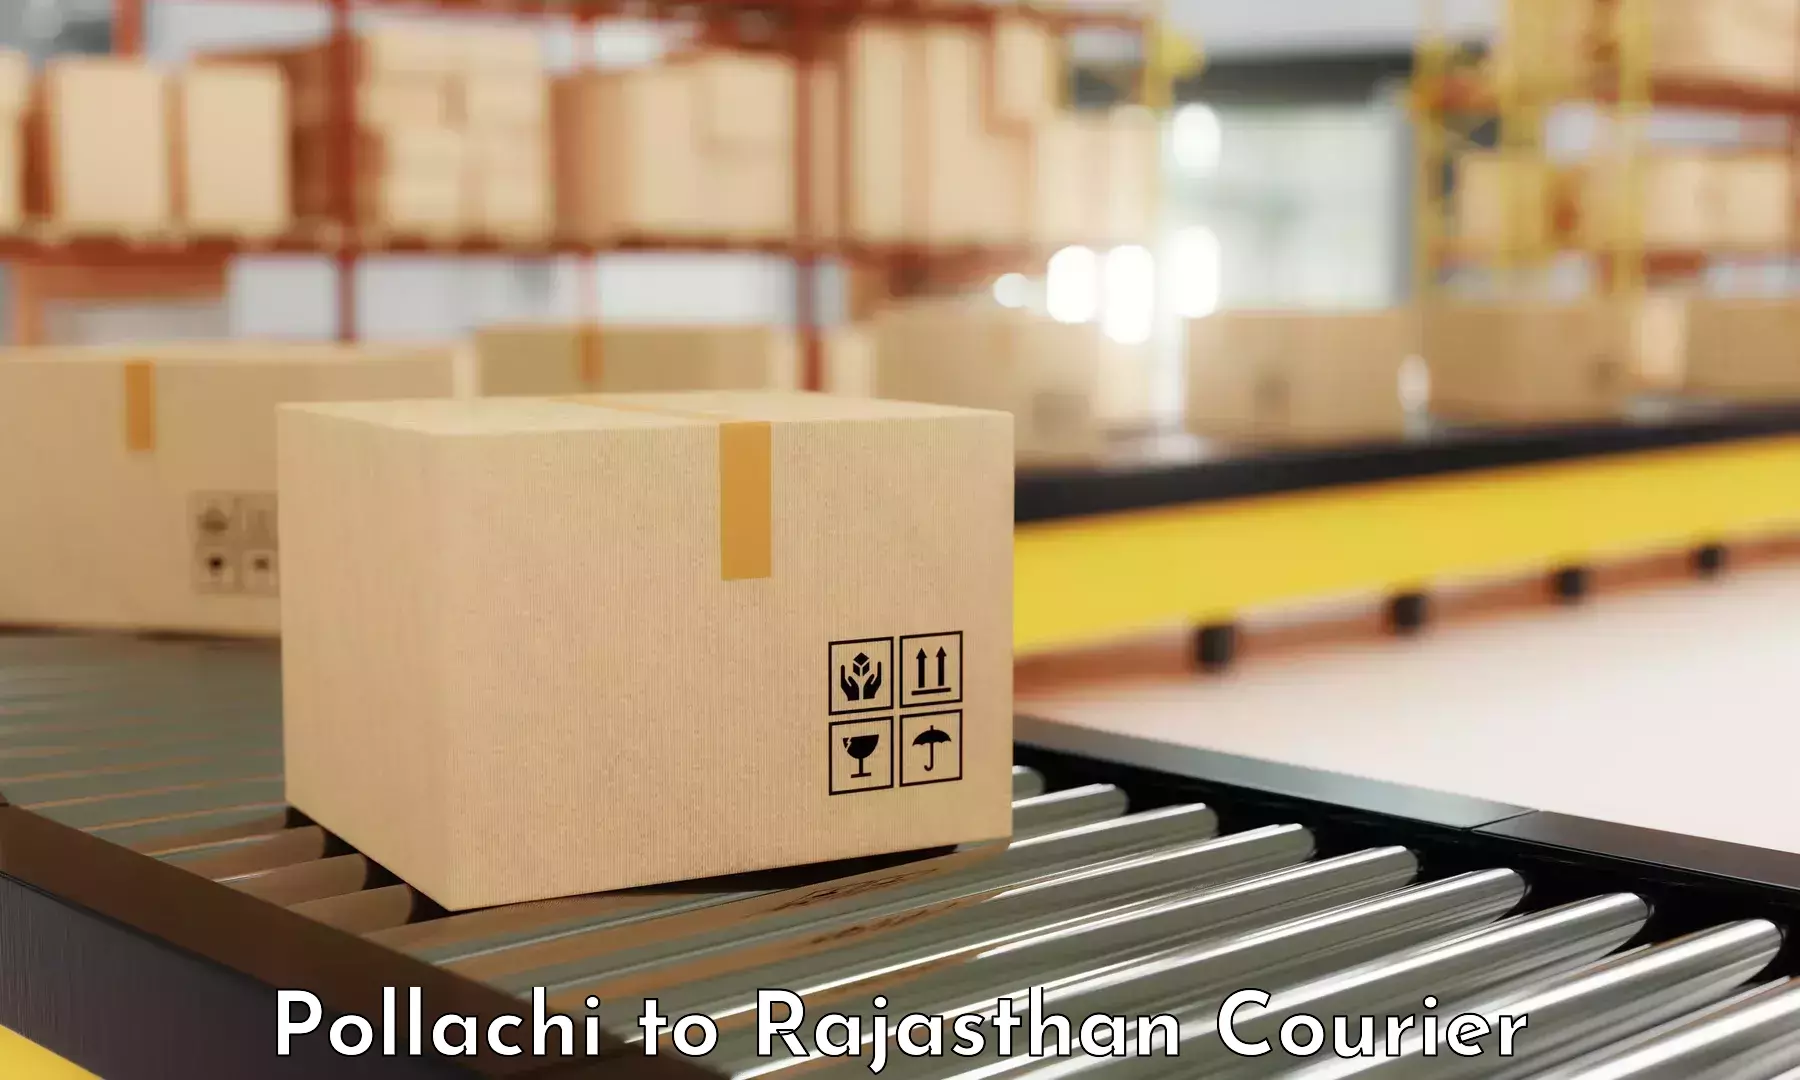 Advanced delivery network Pollachi to Bonli